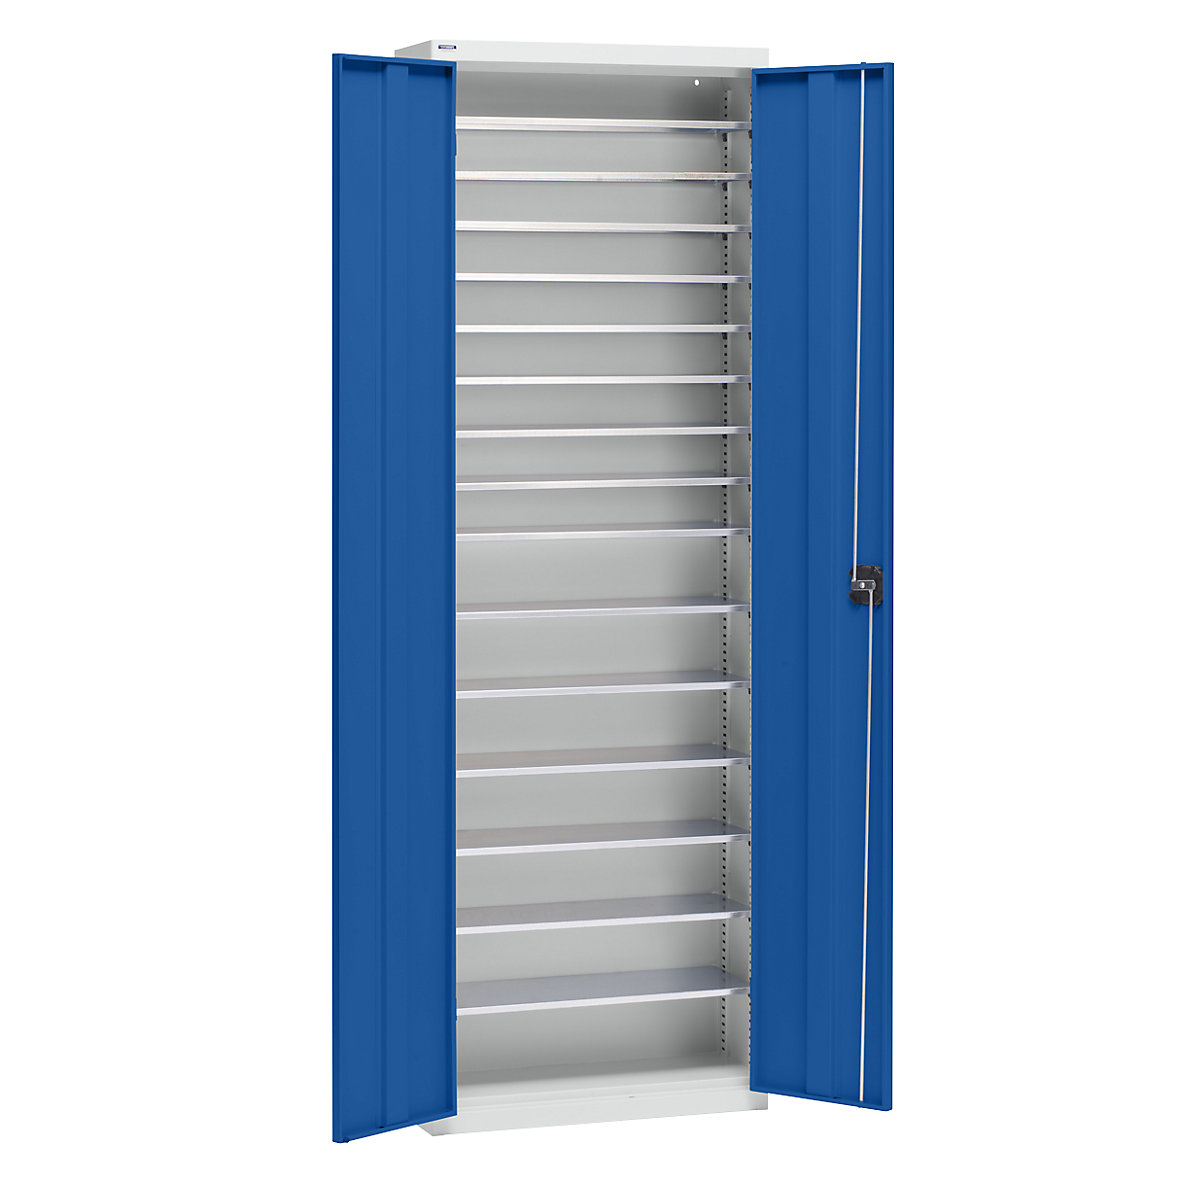 Storage cupboard made of sheet steel – eurokraft pro, height 2000 mm, light grey RAL 7035 / gentian blue RAL 5010, 15 shelves-5